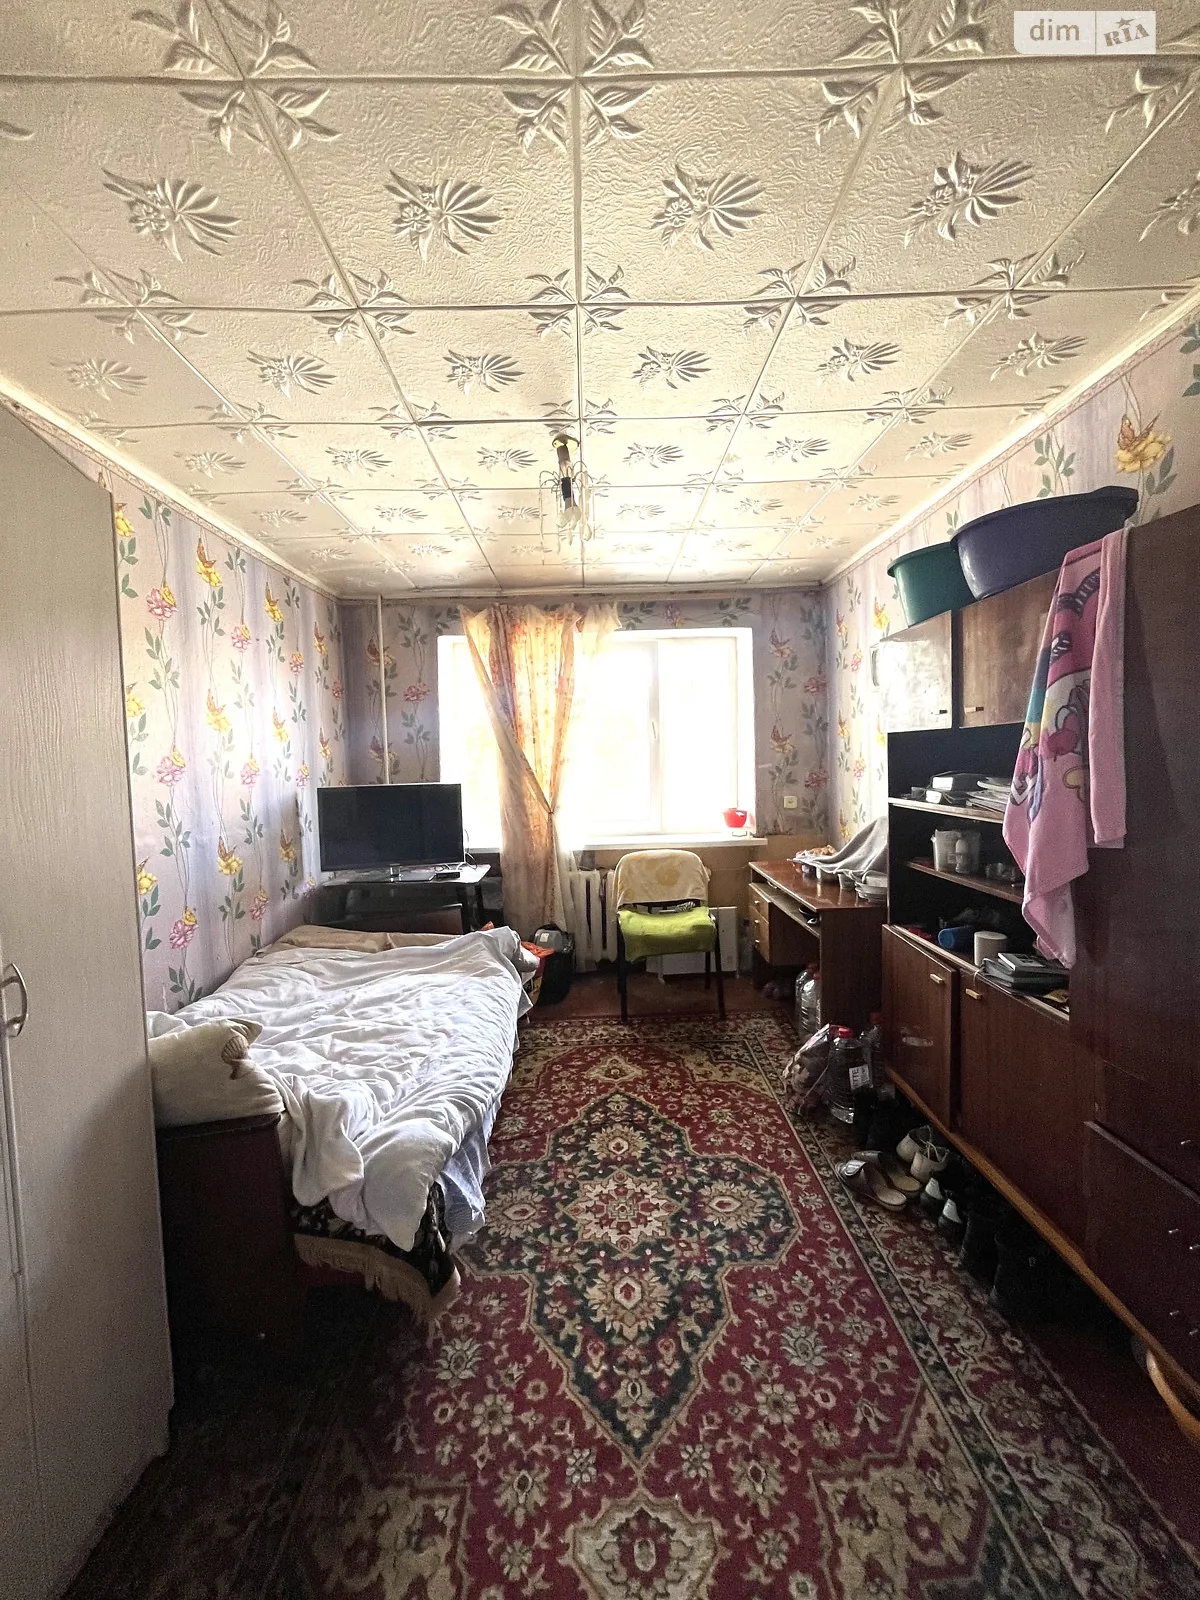 Продается комната 25 кв. м в Николаеве - фото 2